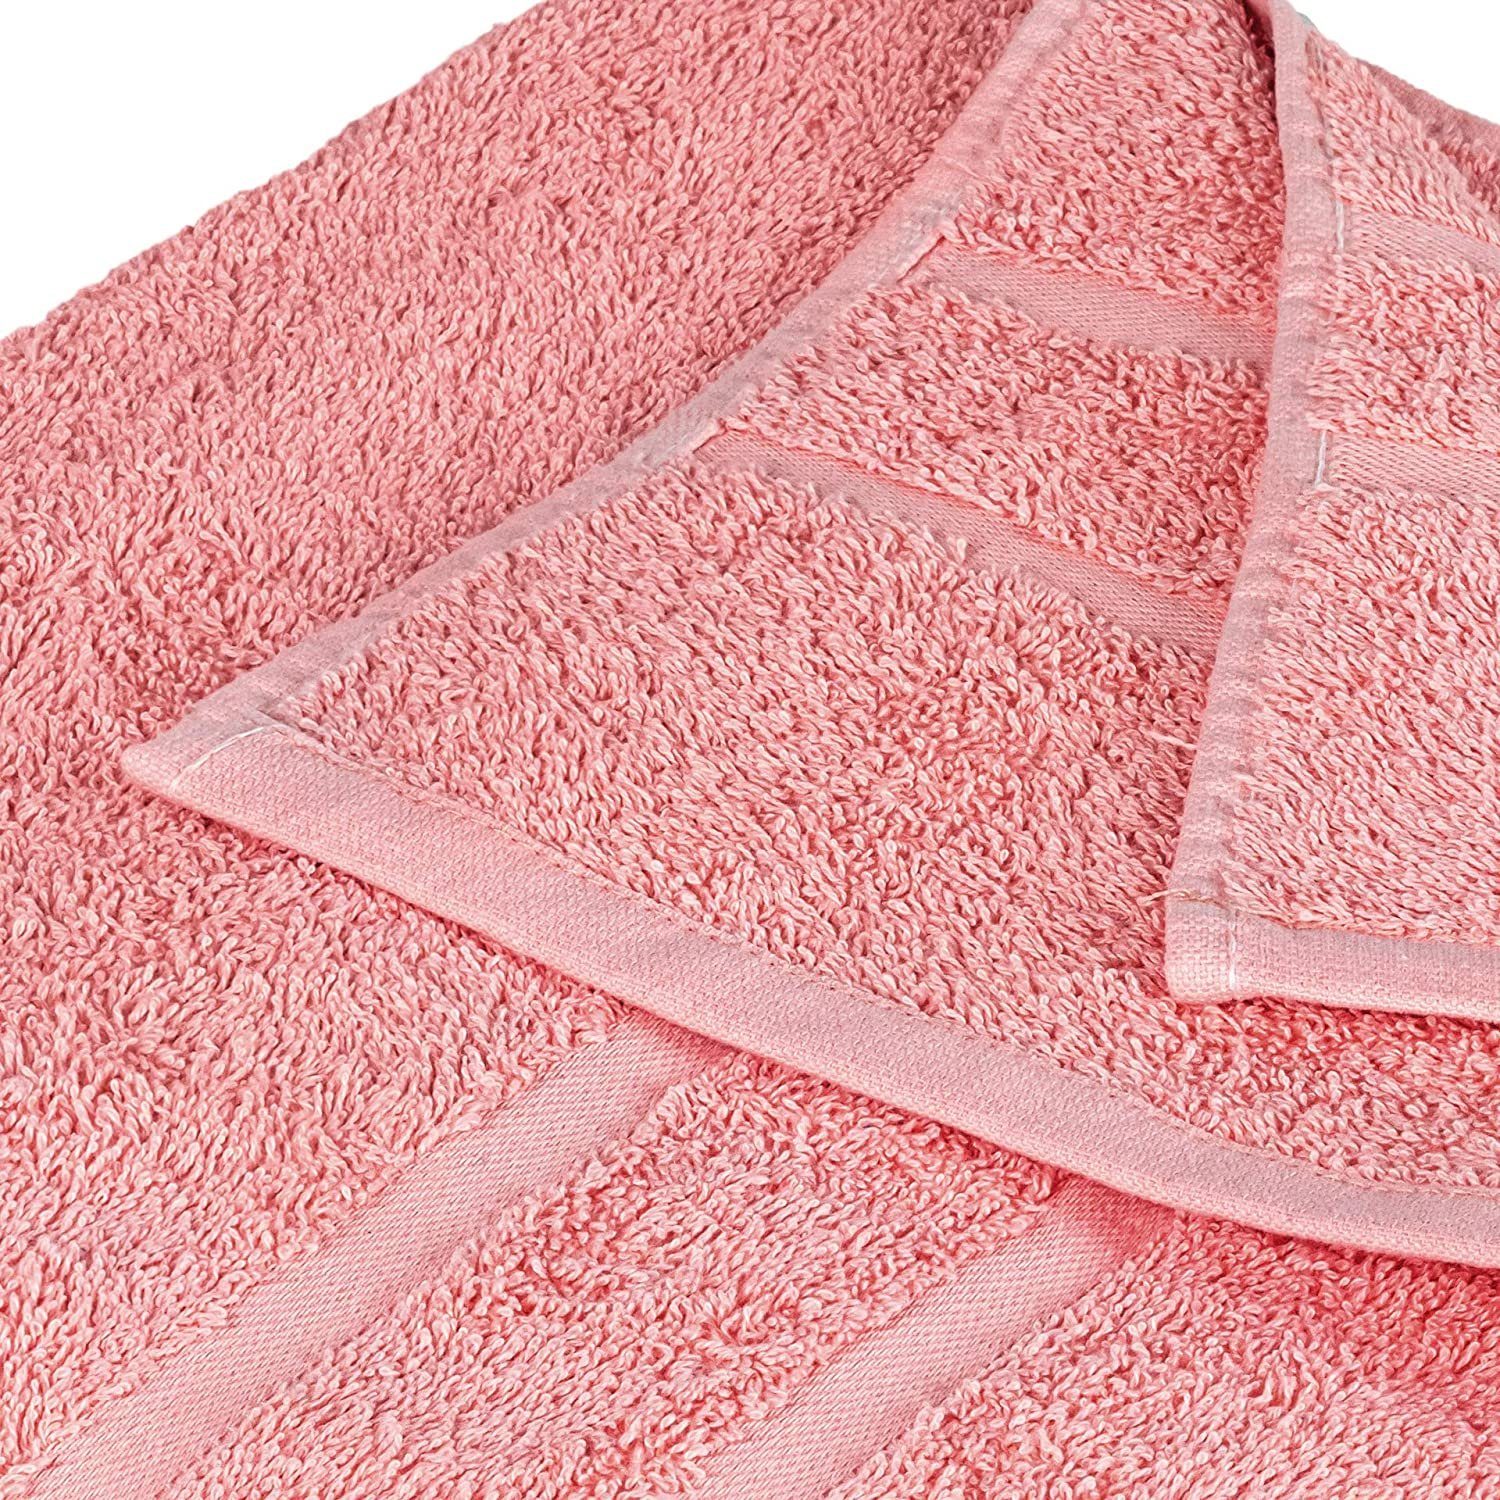 Handtuch Lachs 100% Saunatücher Wahl Gästehandtücher GSM in zur Baumwolle Duschtücher StickandShine 500 Handtücher Badetücher